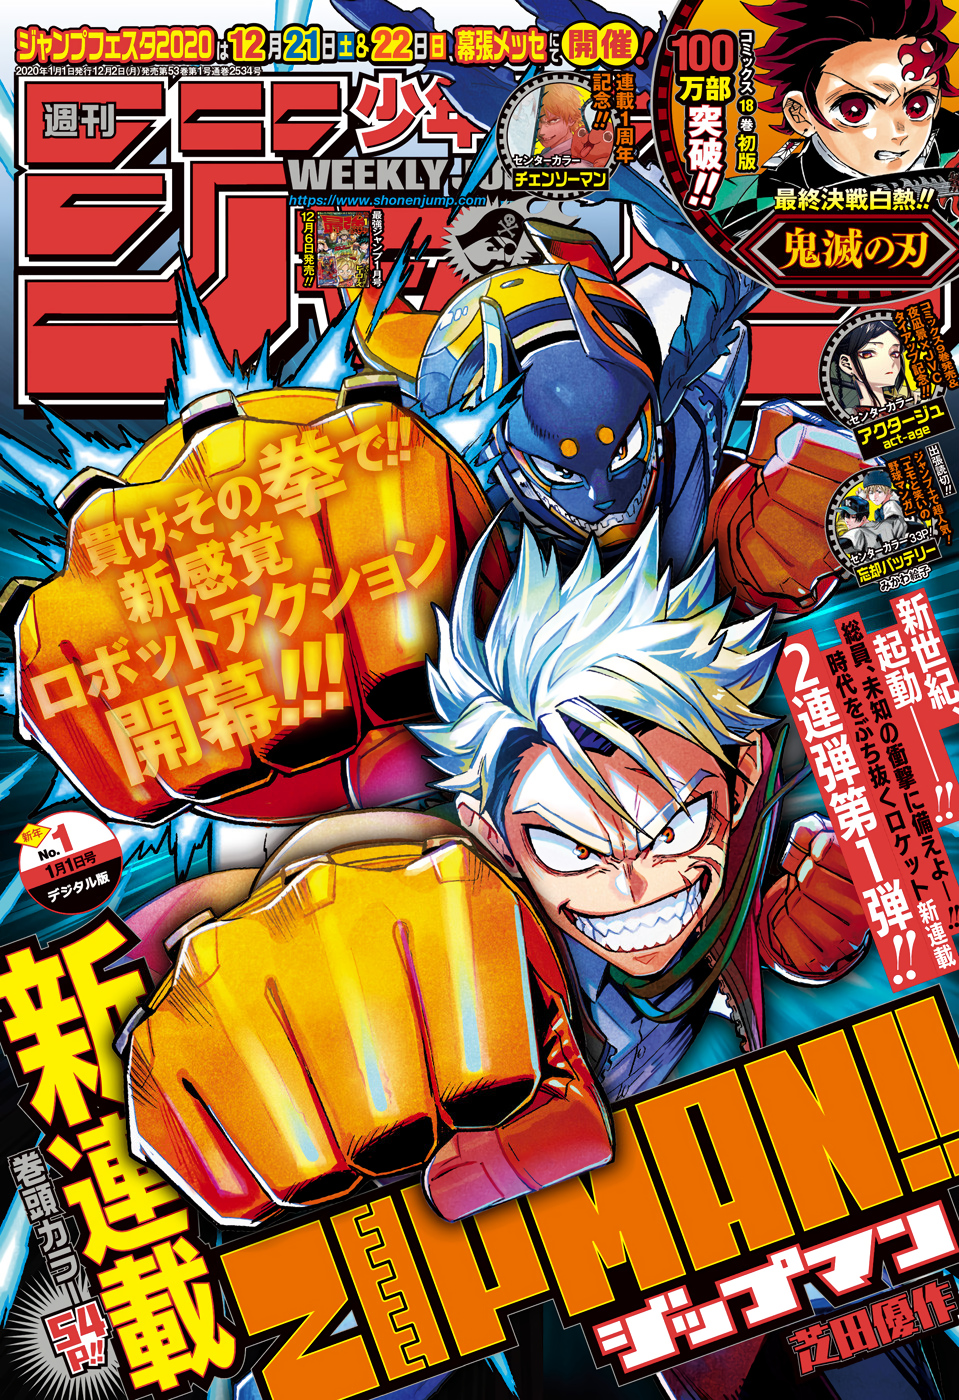 Weekly Shonen Jump Issue 1 Jump Database Fandom